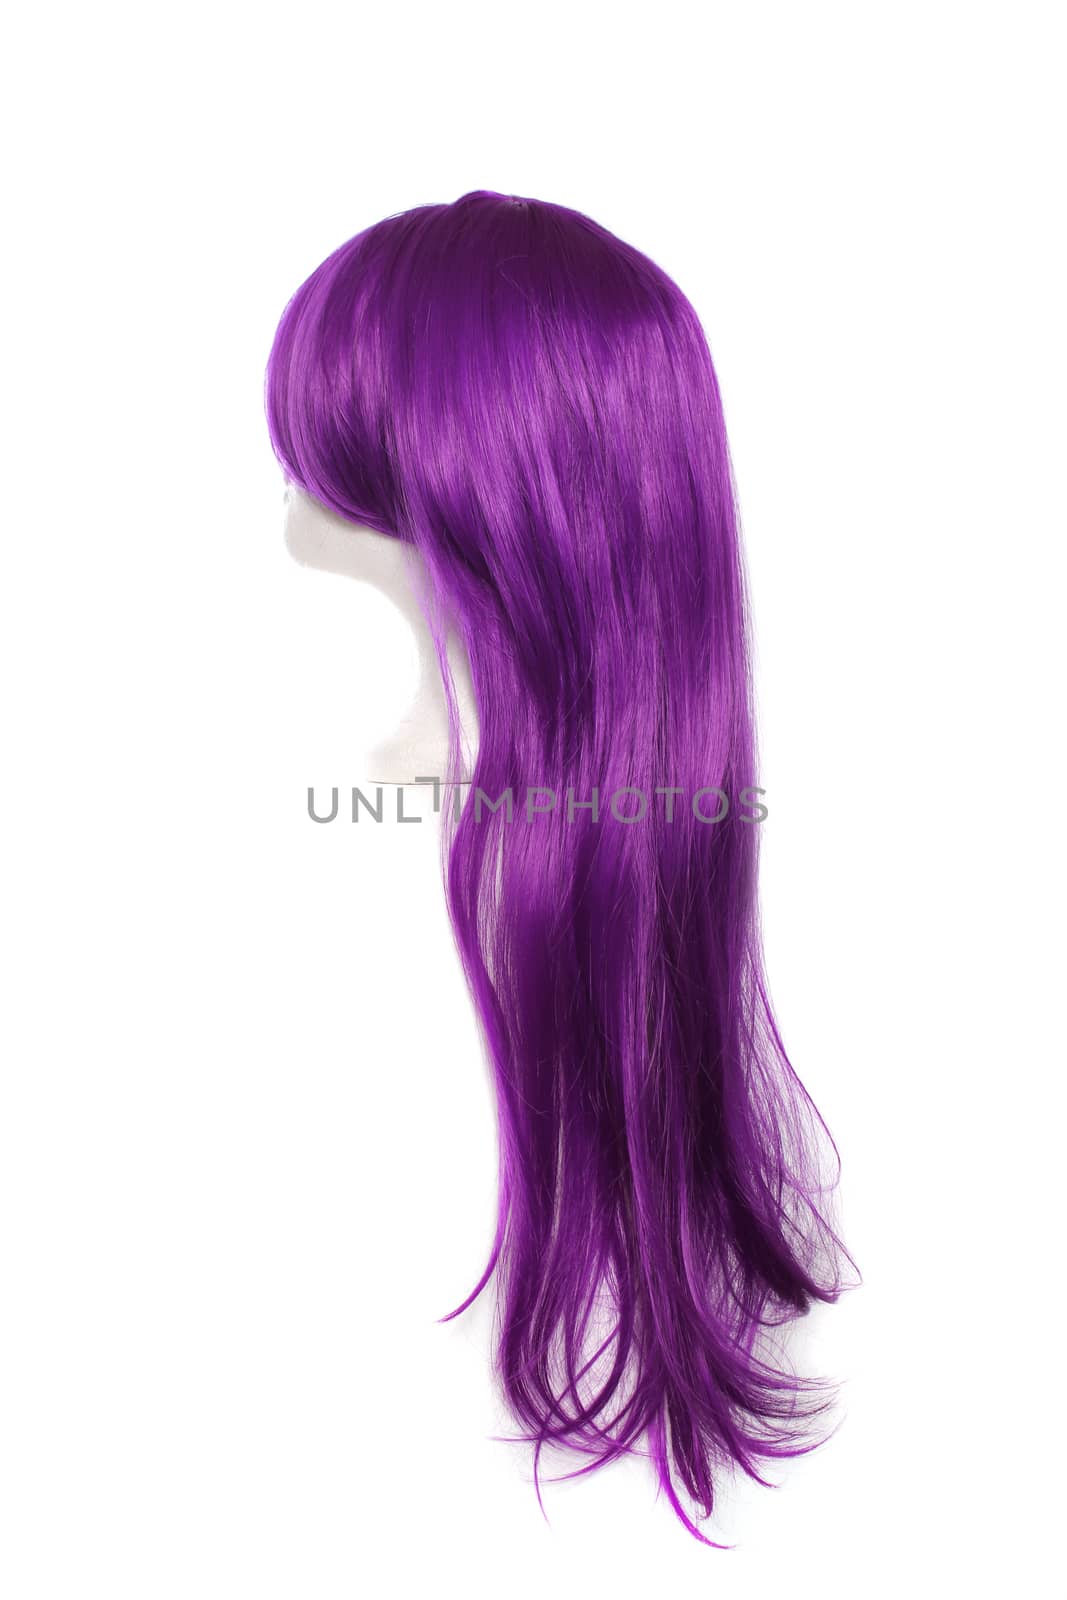 Purple Anime Style Wig on White Background